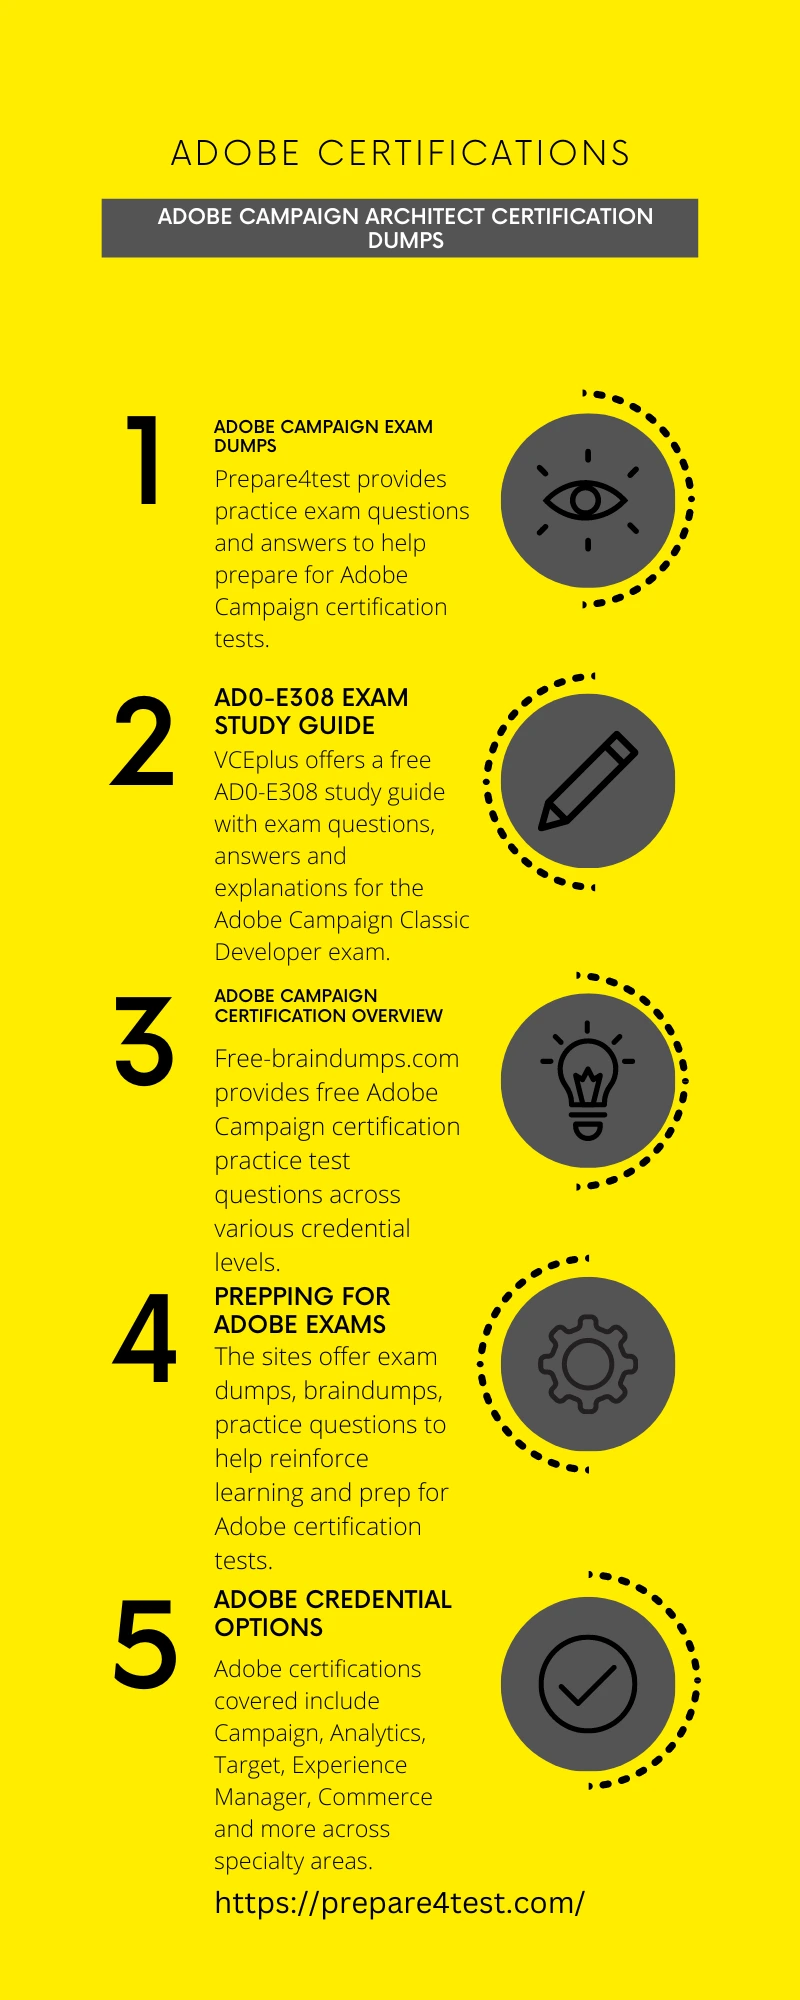 Adobe Campaign Architect Certification Dumps Infographic